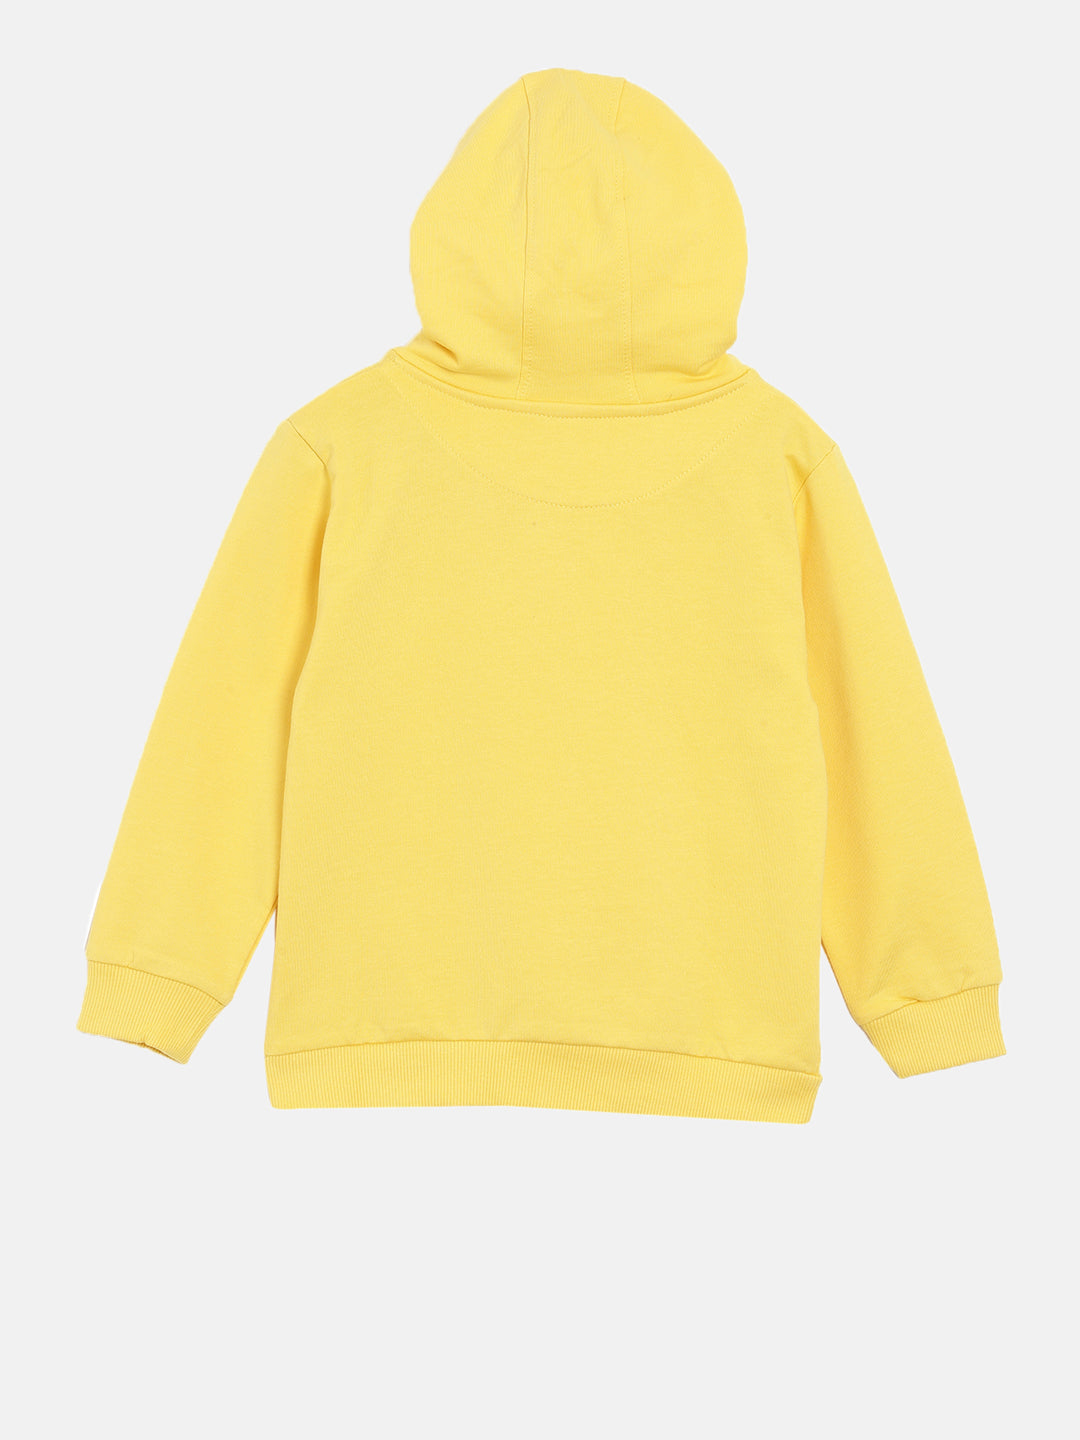 Trendy hooded sweatshirt for boys